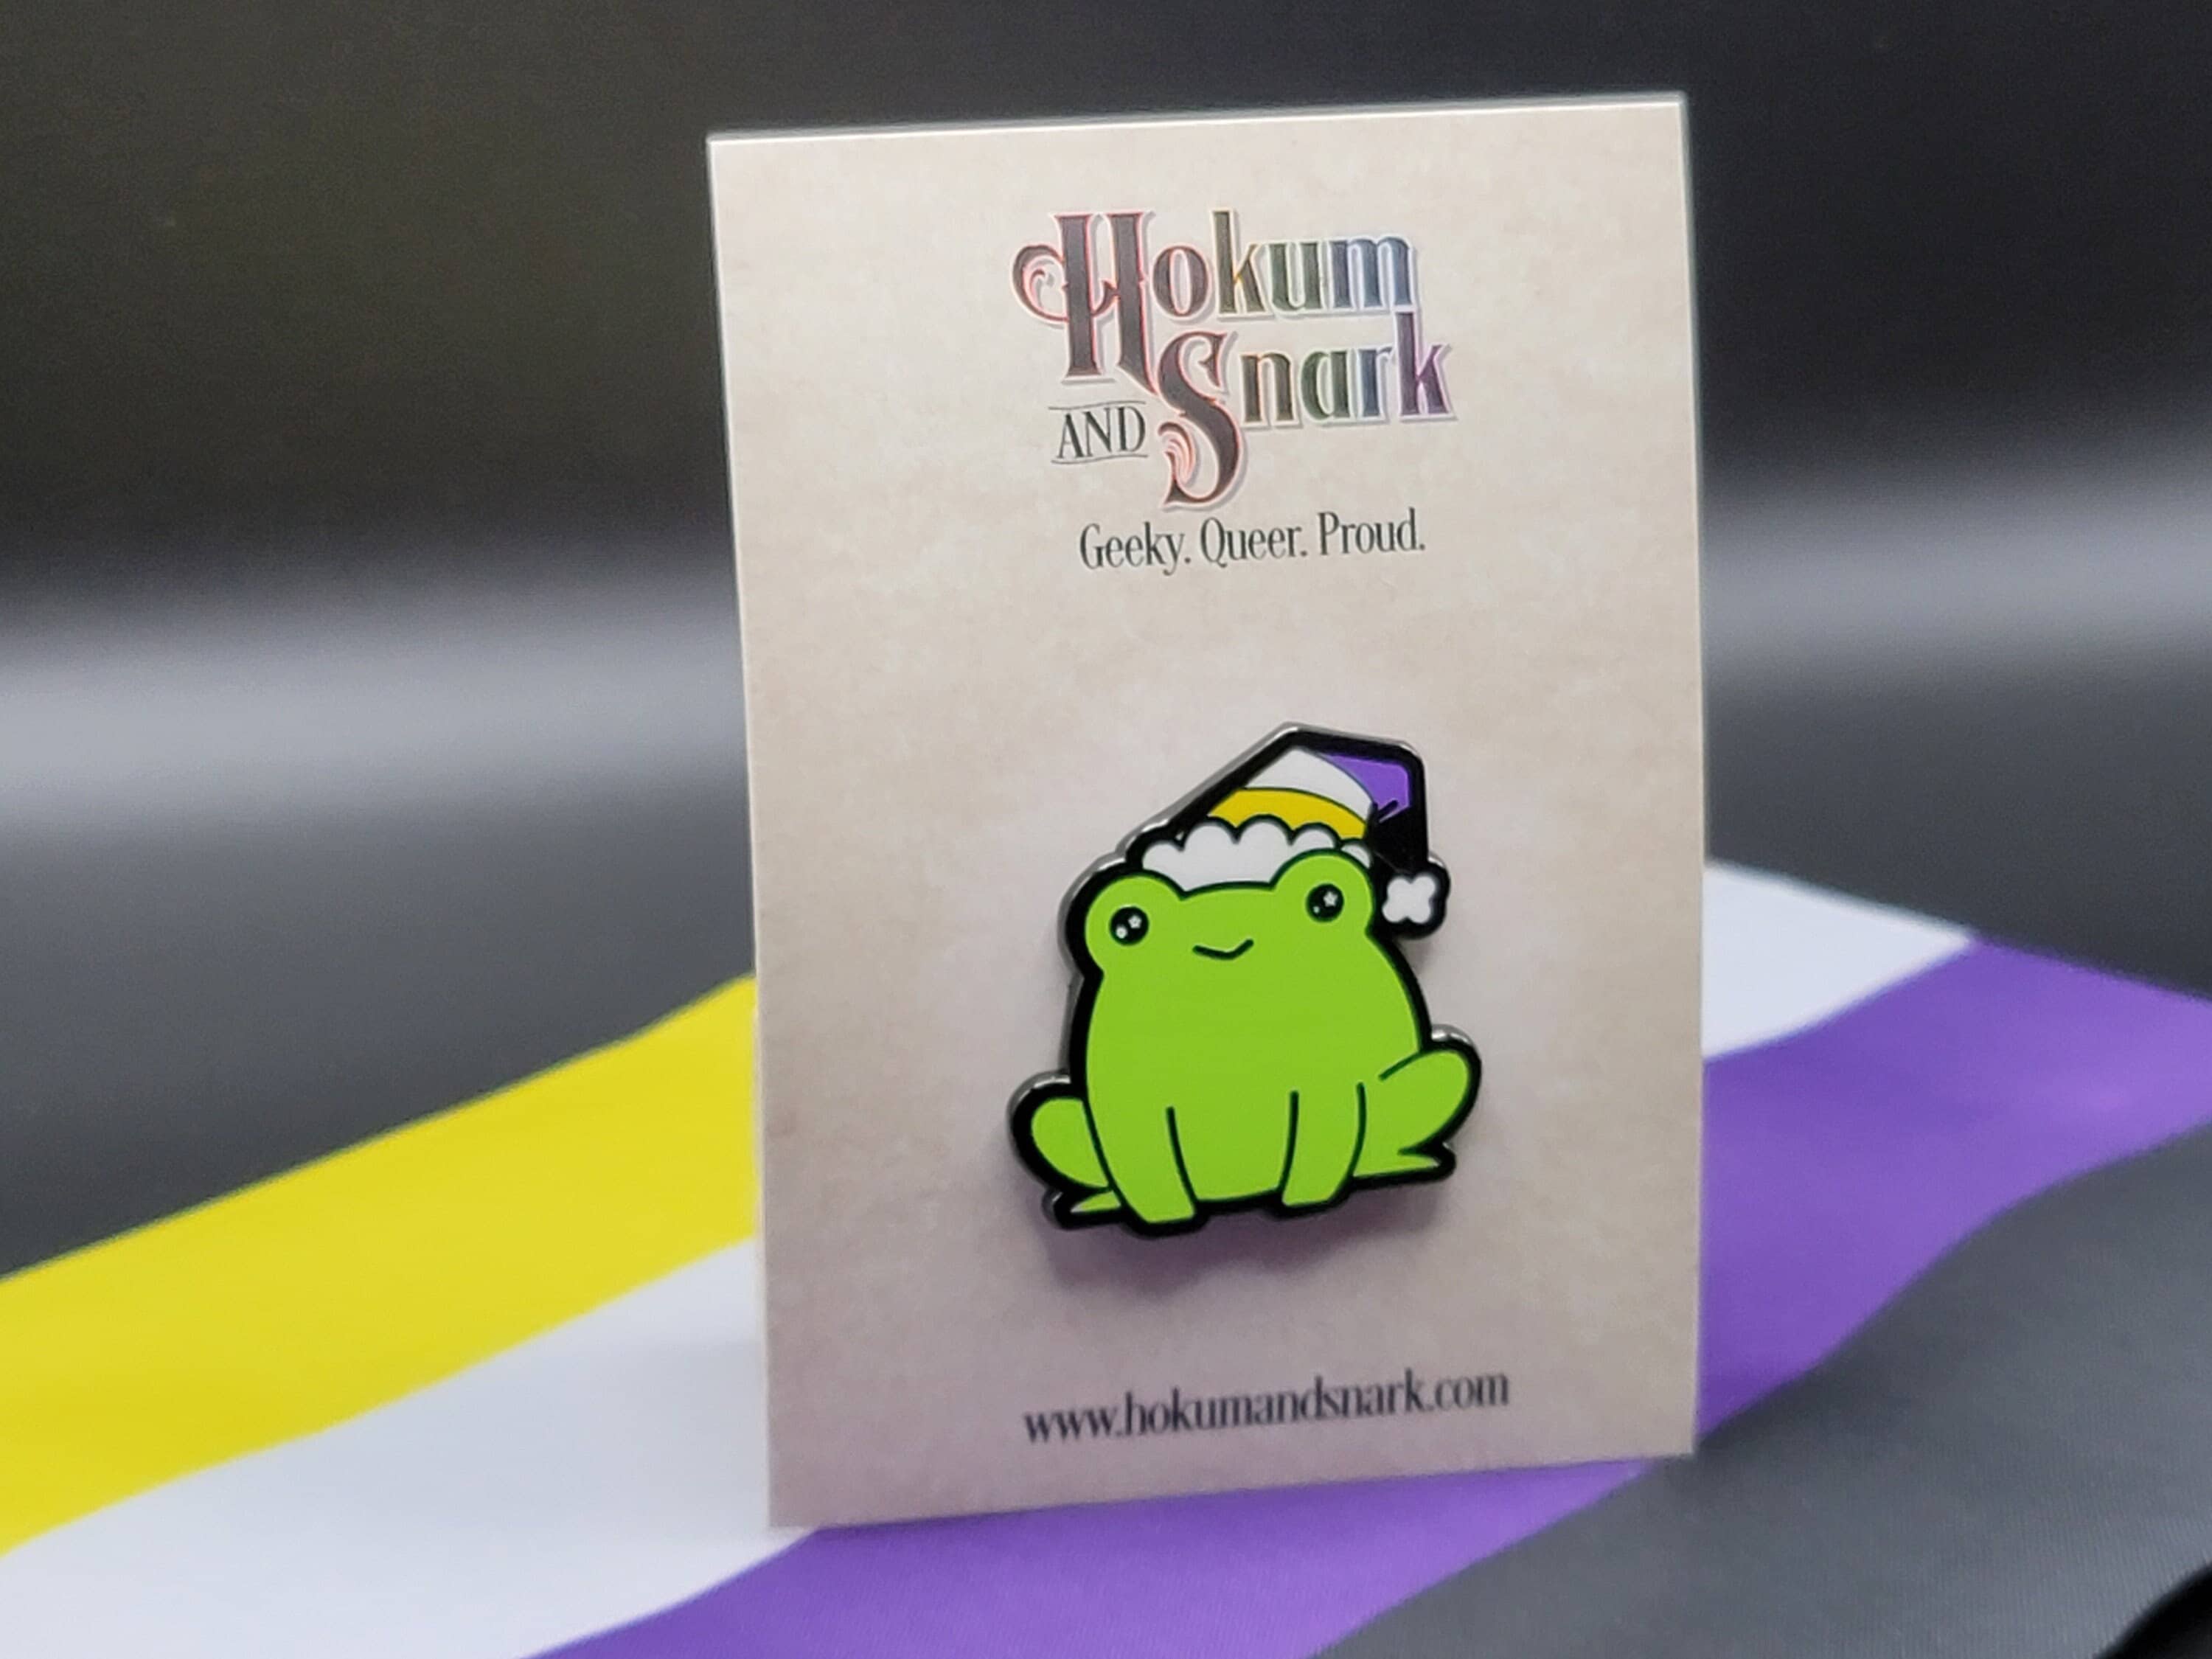 Nonbinary Pride Frog Pin in Enby LGBT+ Flag Colors | Chibi Superhero Gay  Frog Pin